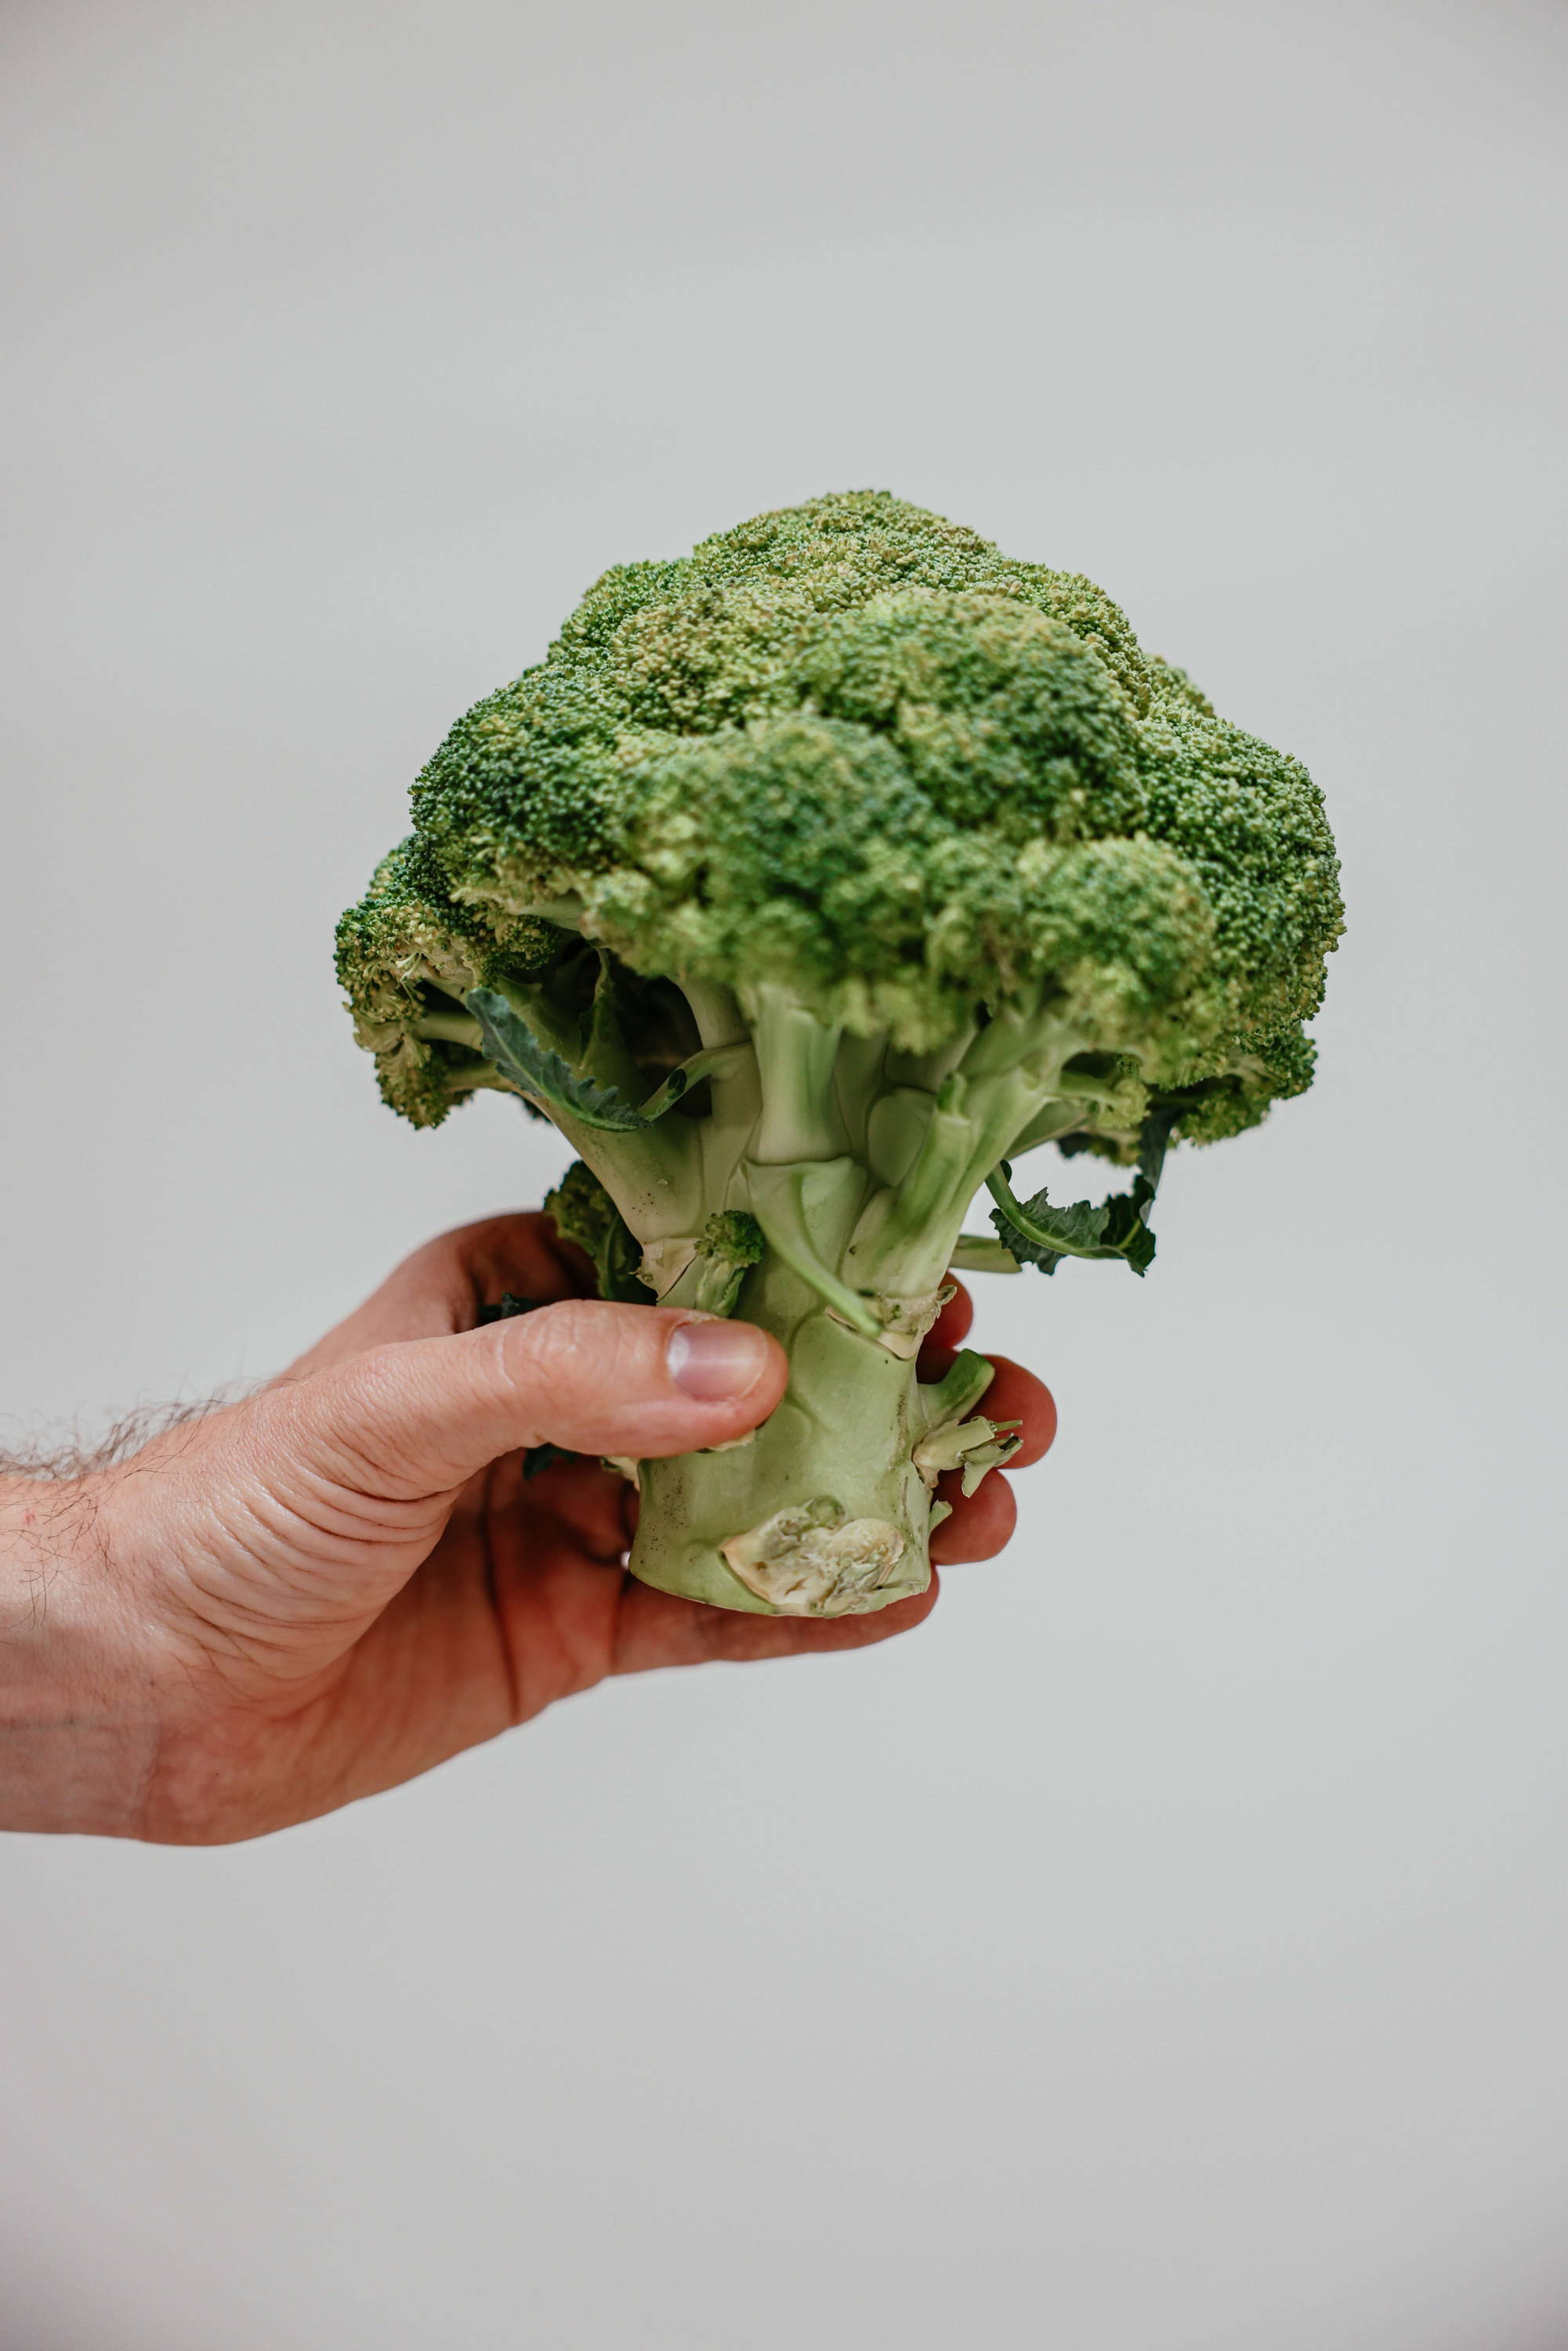 Hand holding a broccoli